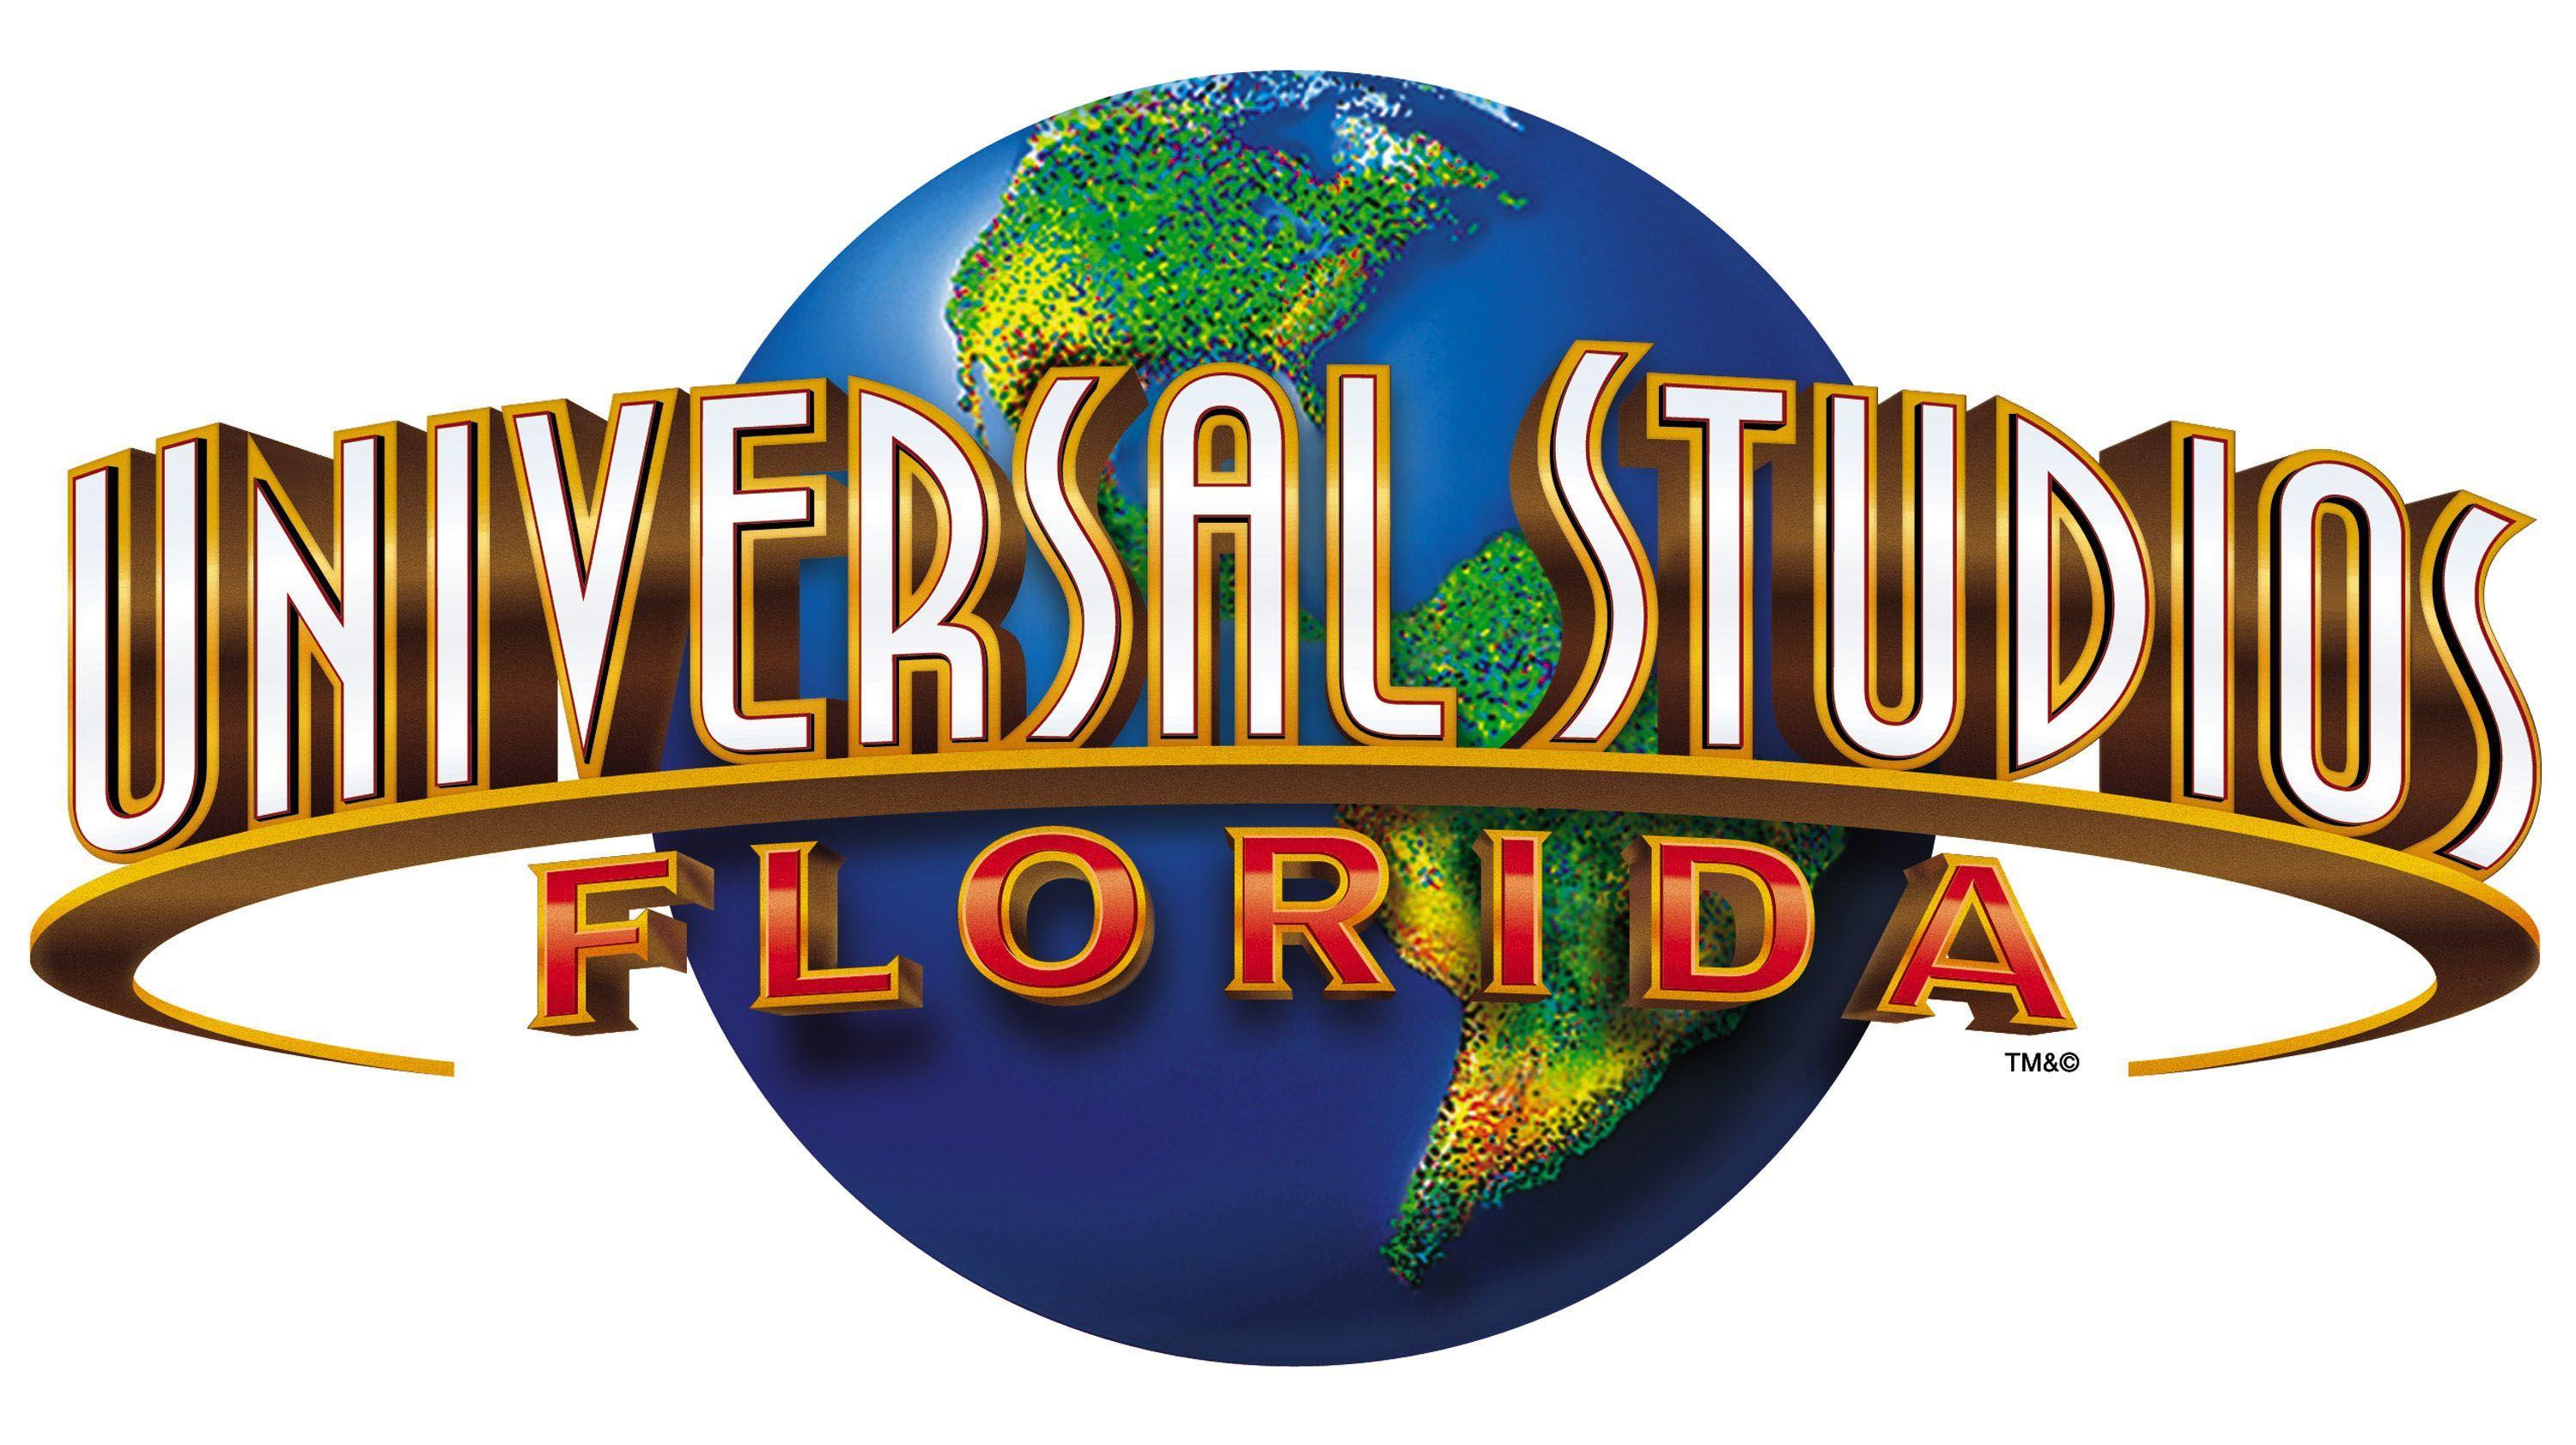 Orlando Logo - Universal Studios Orlando Logo 2014 | Cool items | Universal studios ...